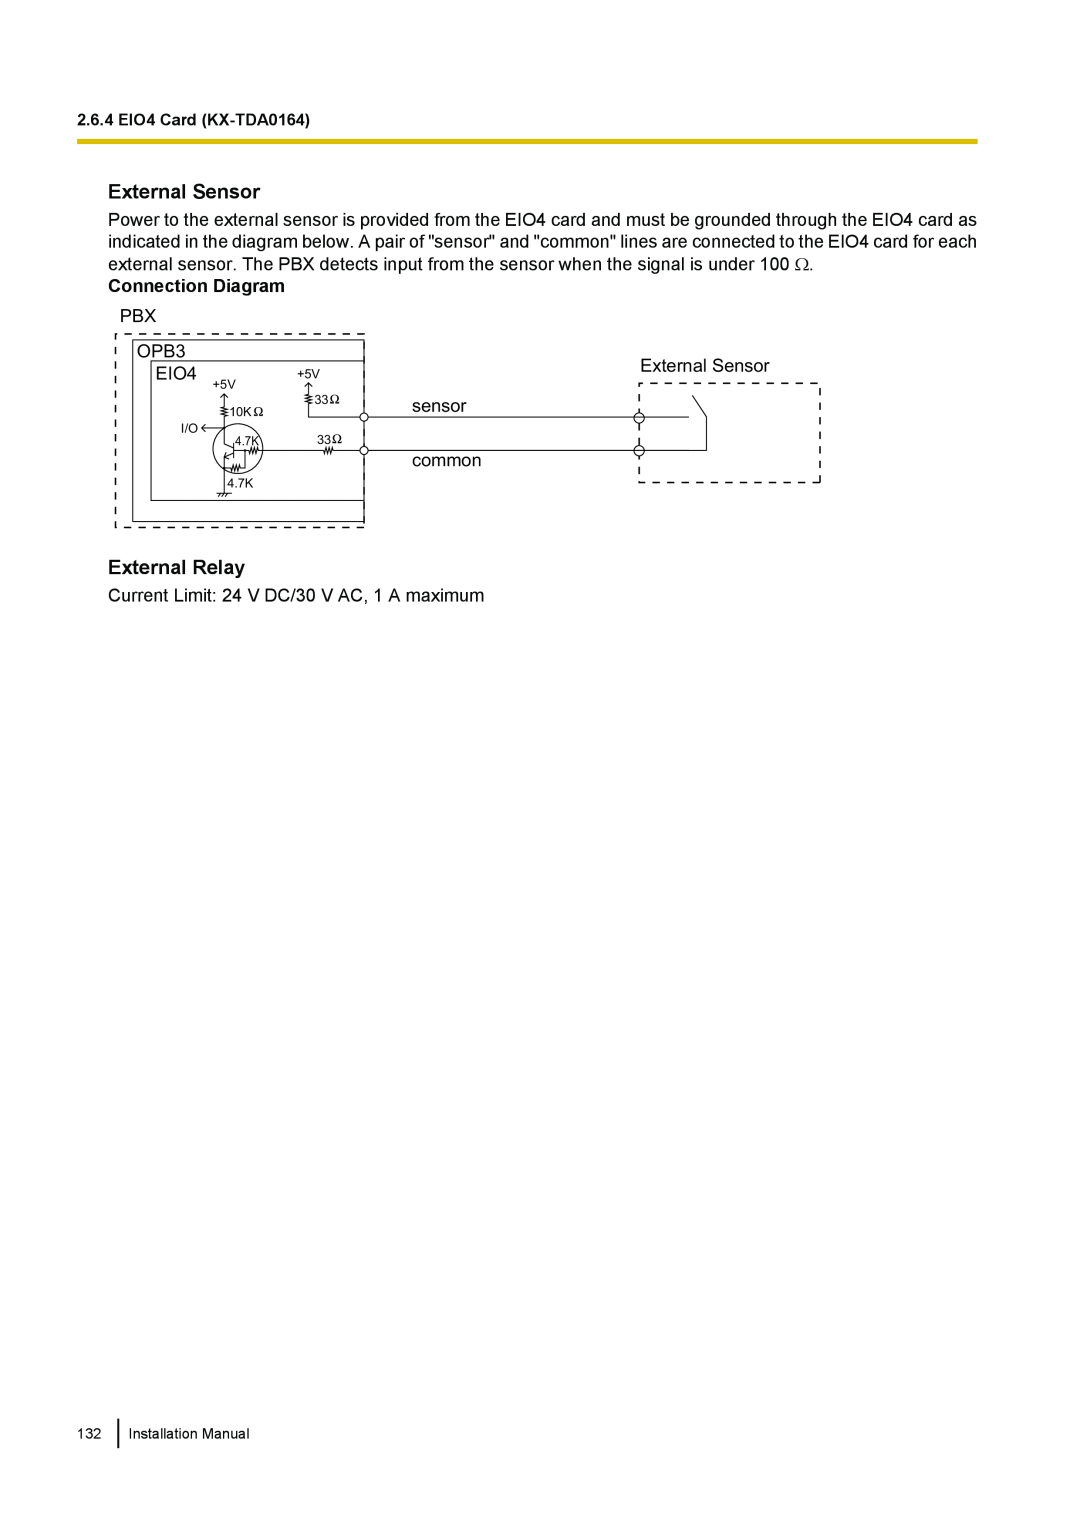 Panasonic KX-TDA100 installation manual External Sensor, External Relay, Connection Diagram 